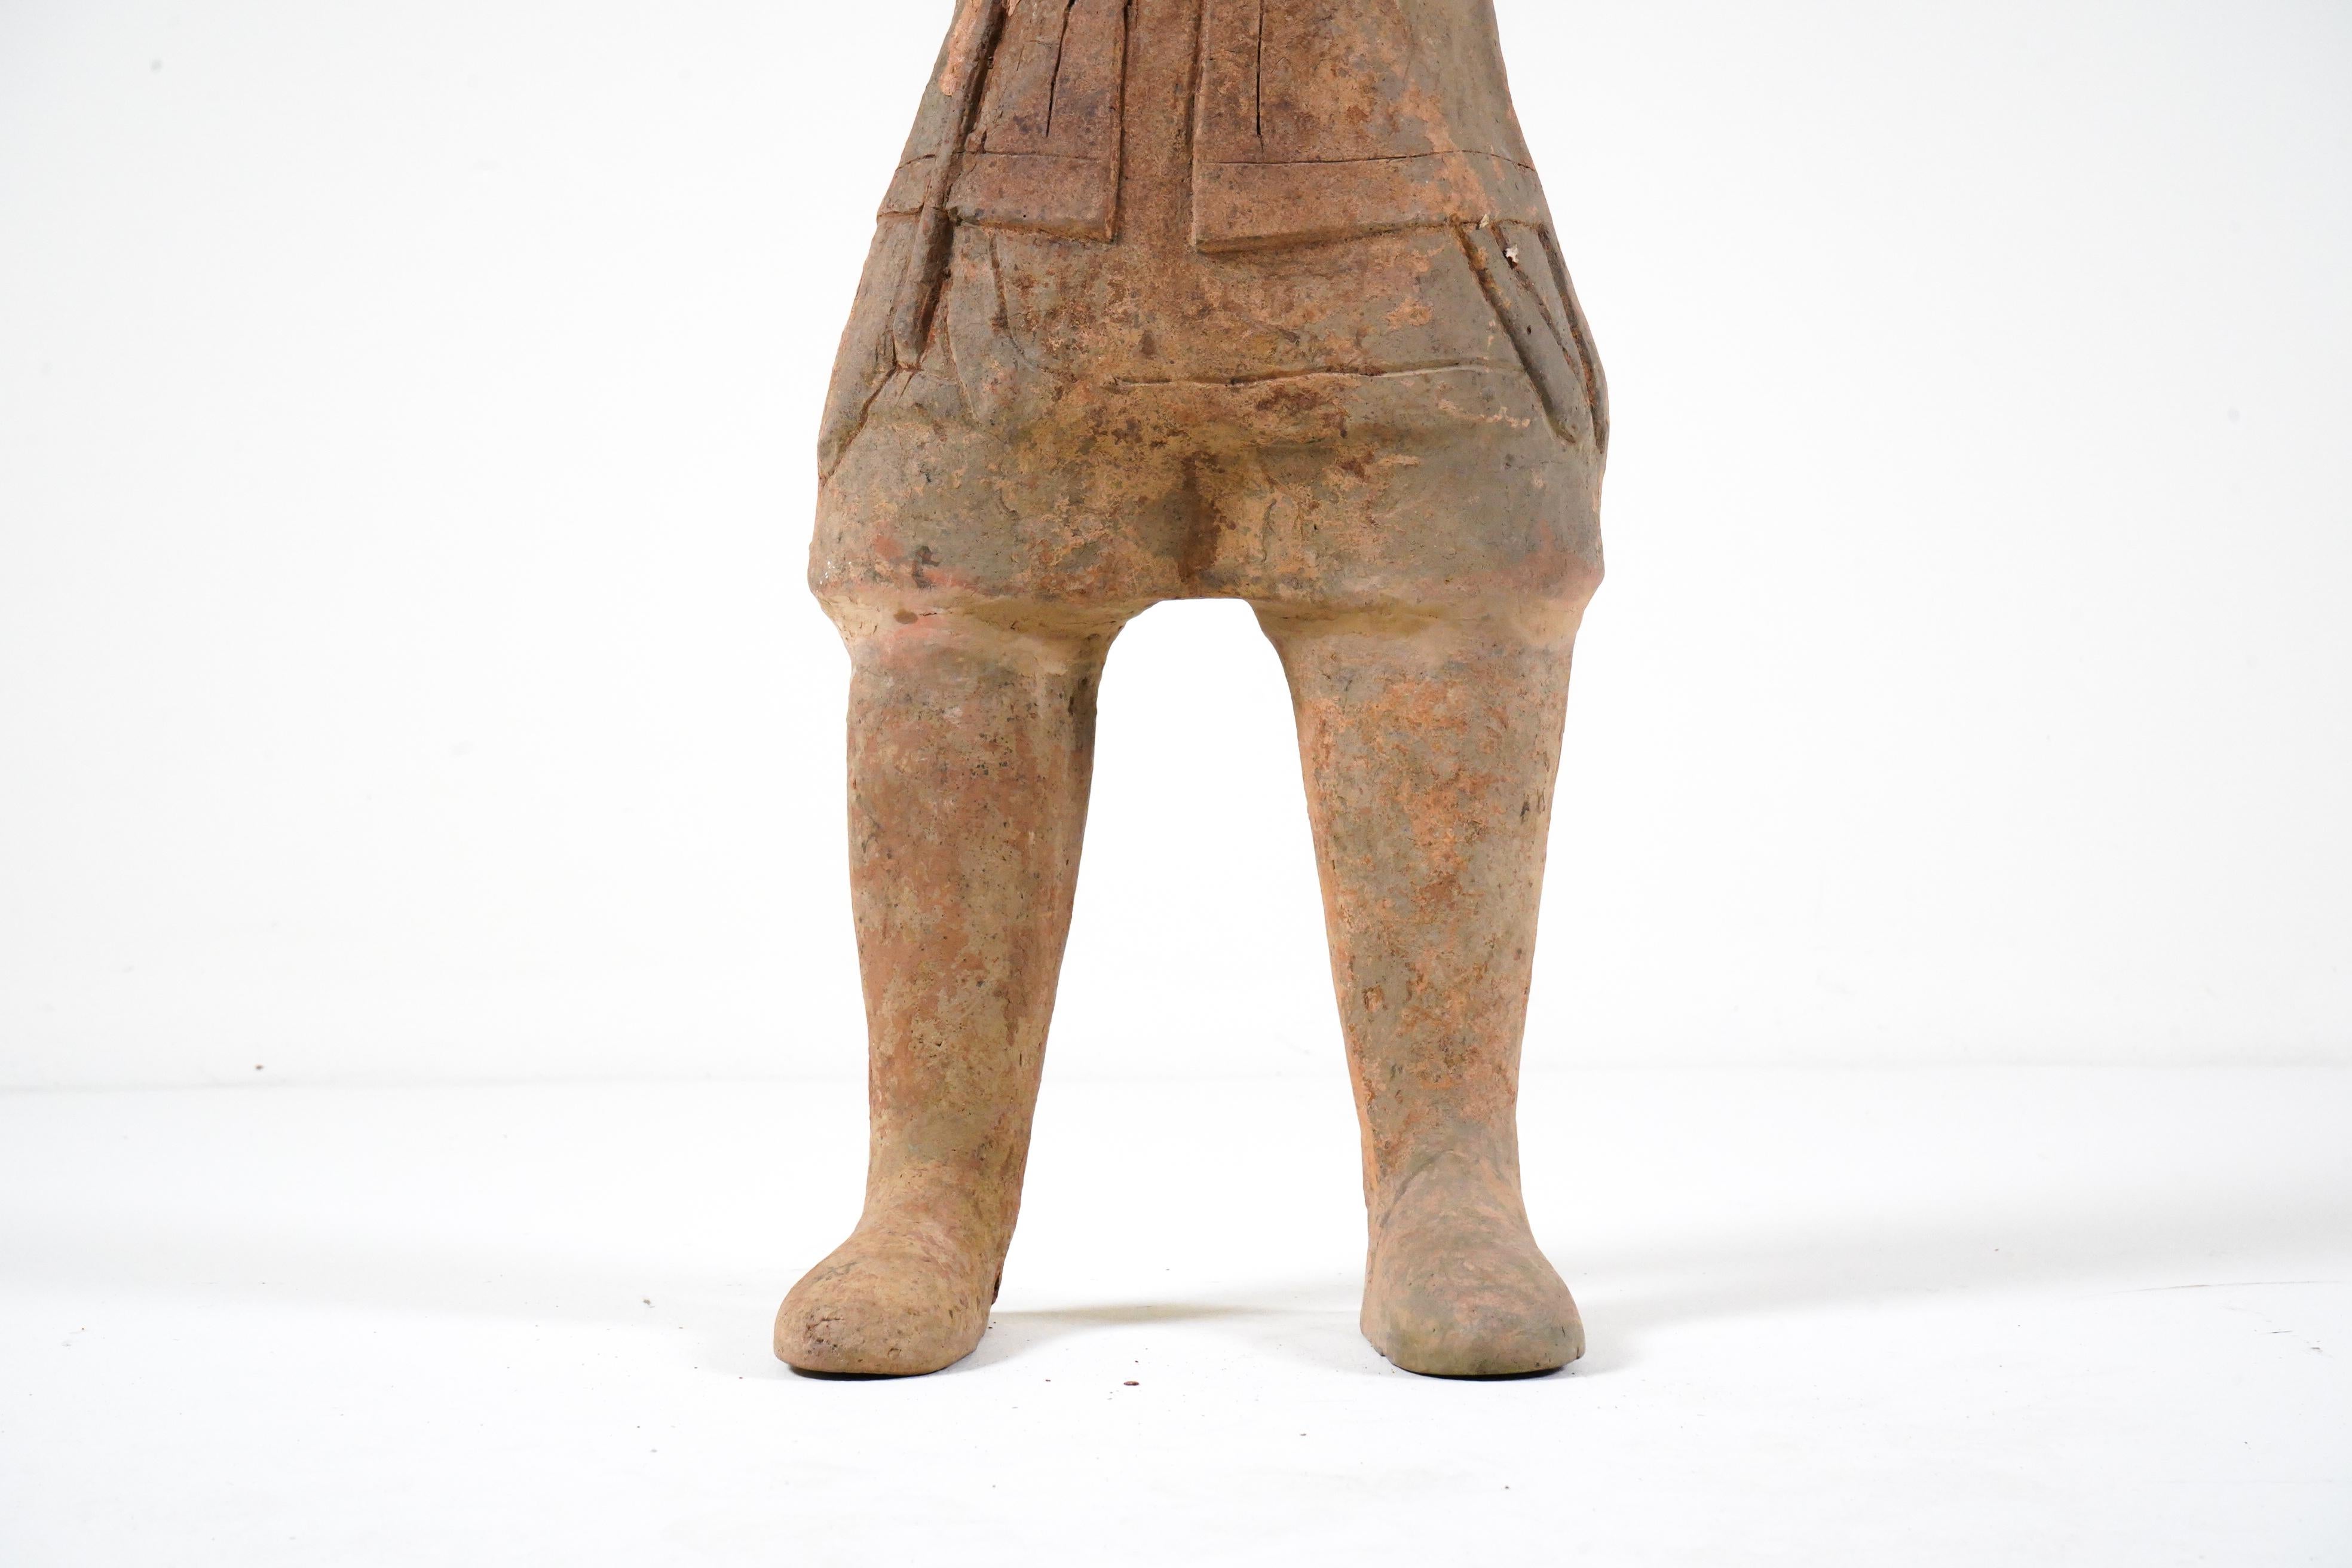 han dynasty terracotta figures